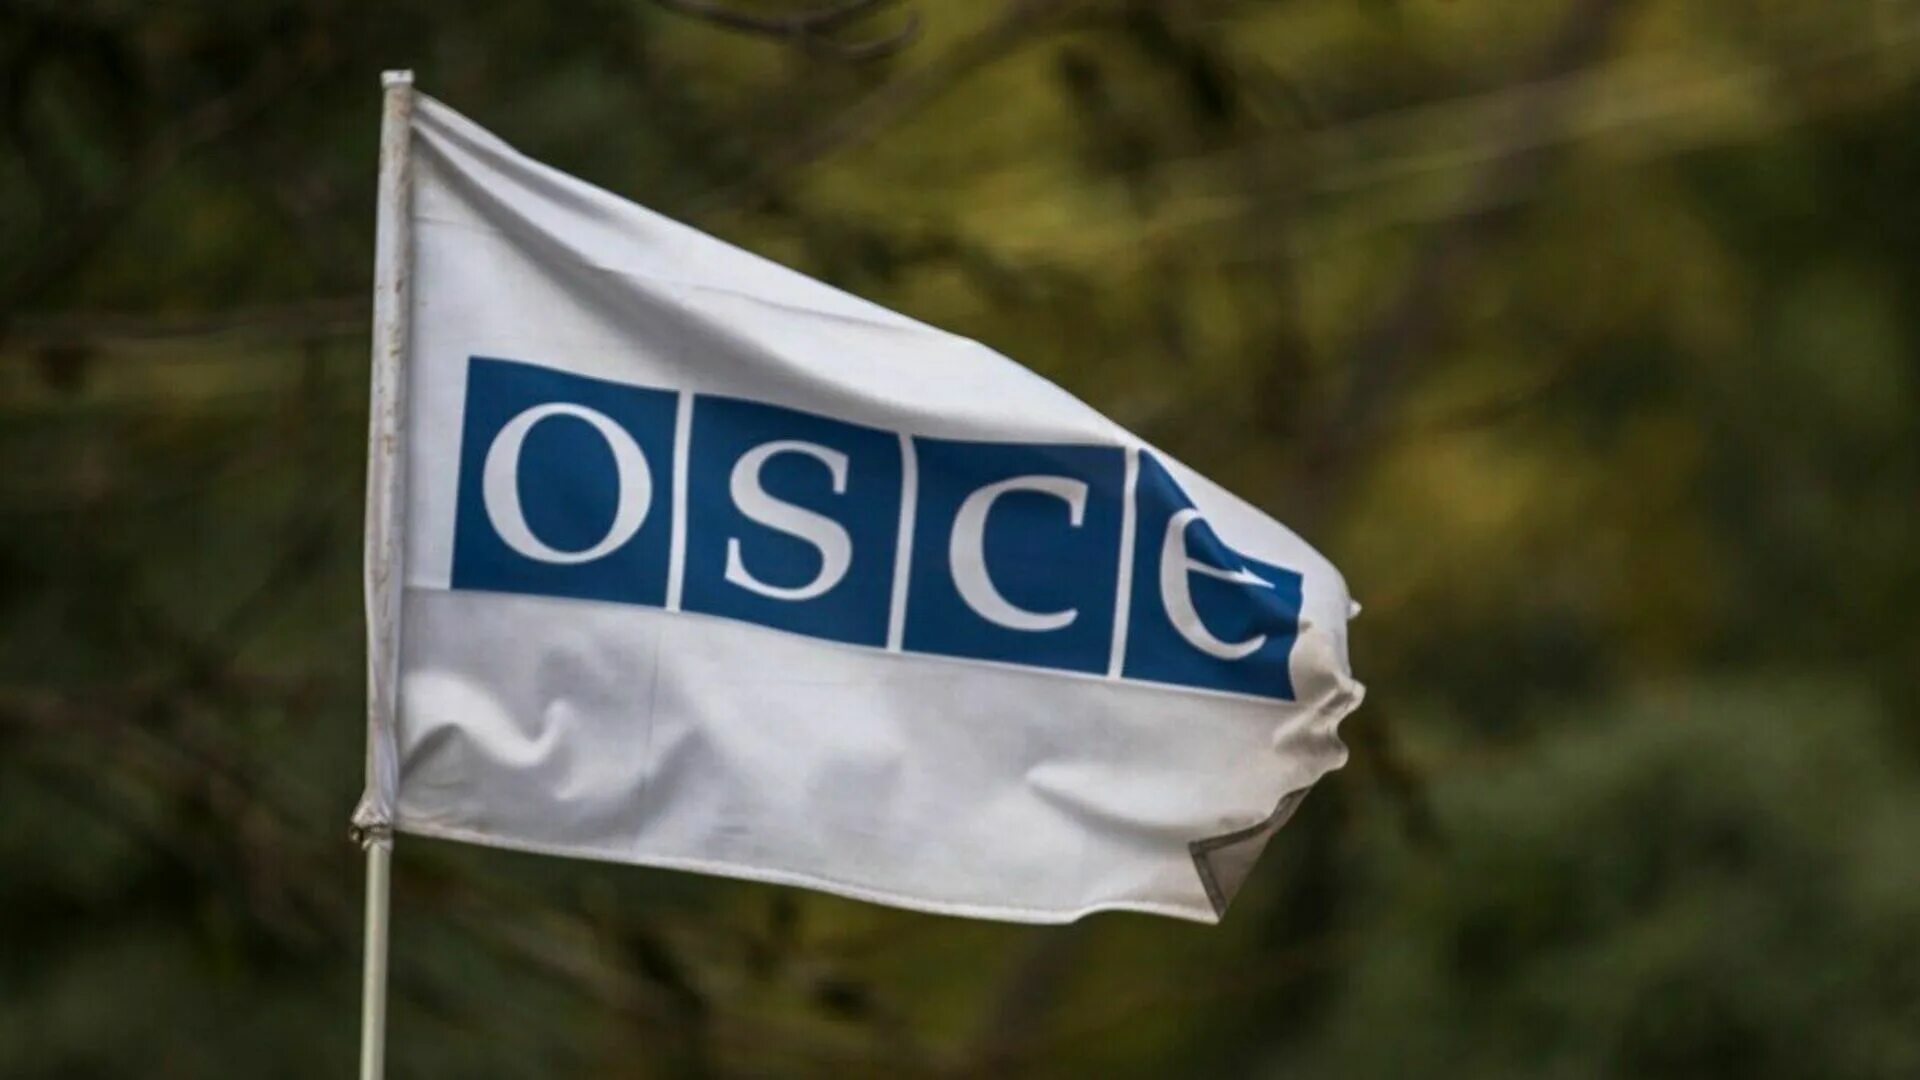 Обсе оон. ОБСЕ. Флаг ОБСЕ. Казахстан и ОБСЕ. Саммит ОБСЕ.